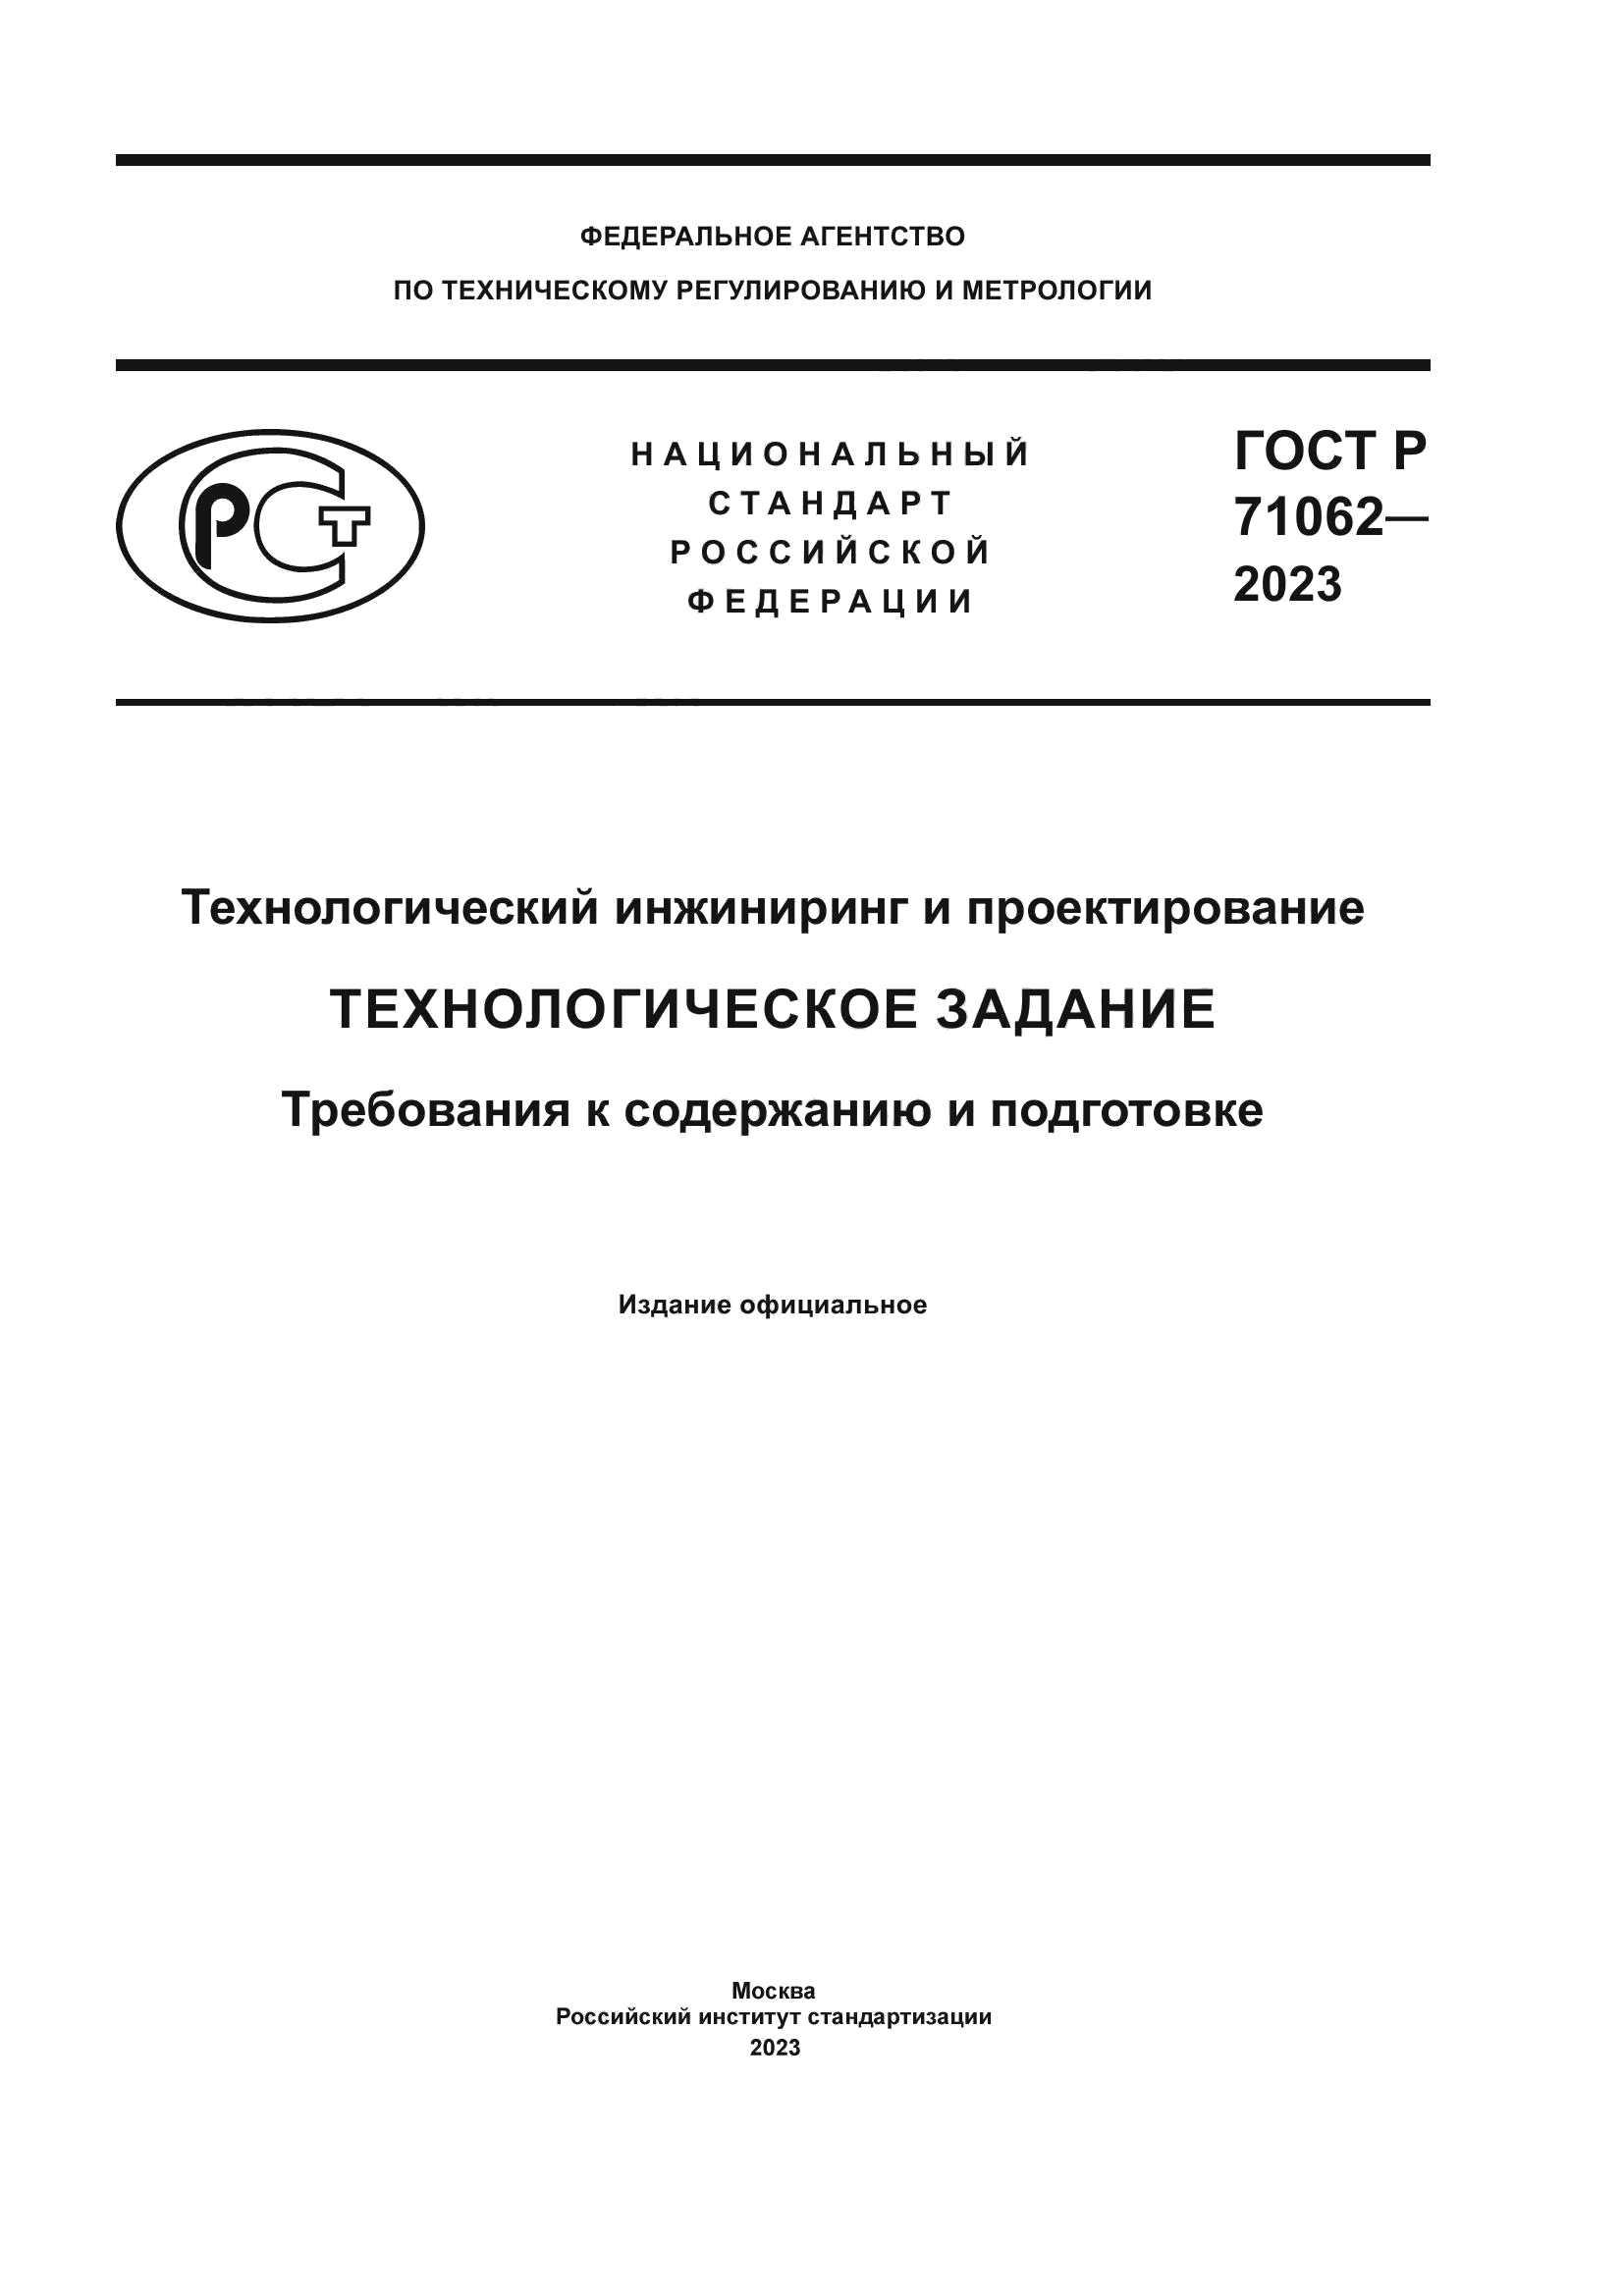 ГОСТ Р 71062-2023